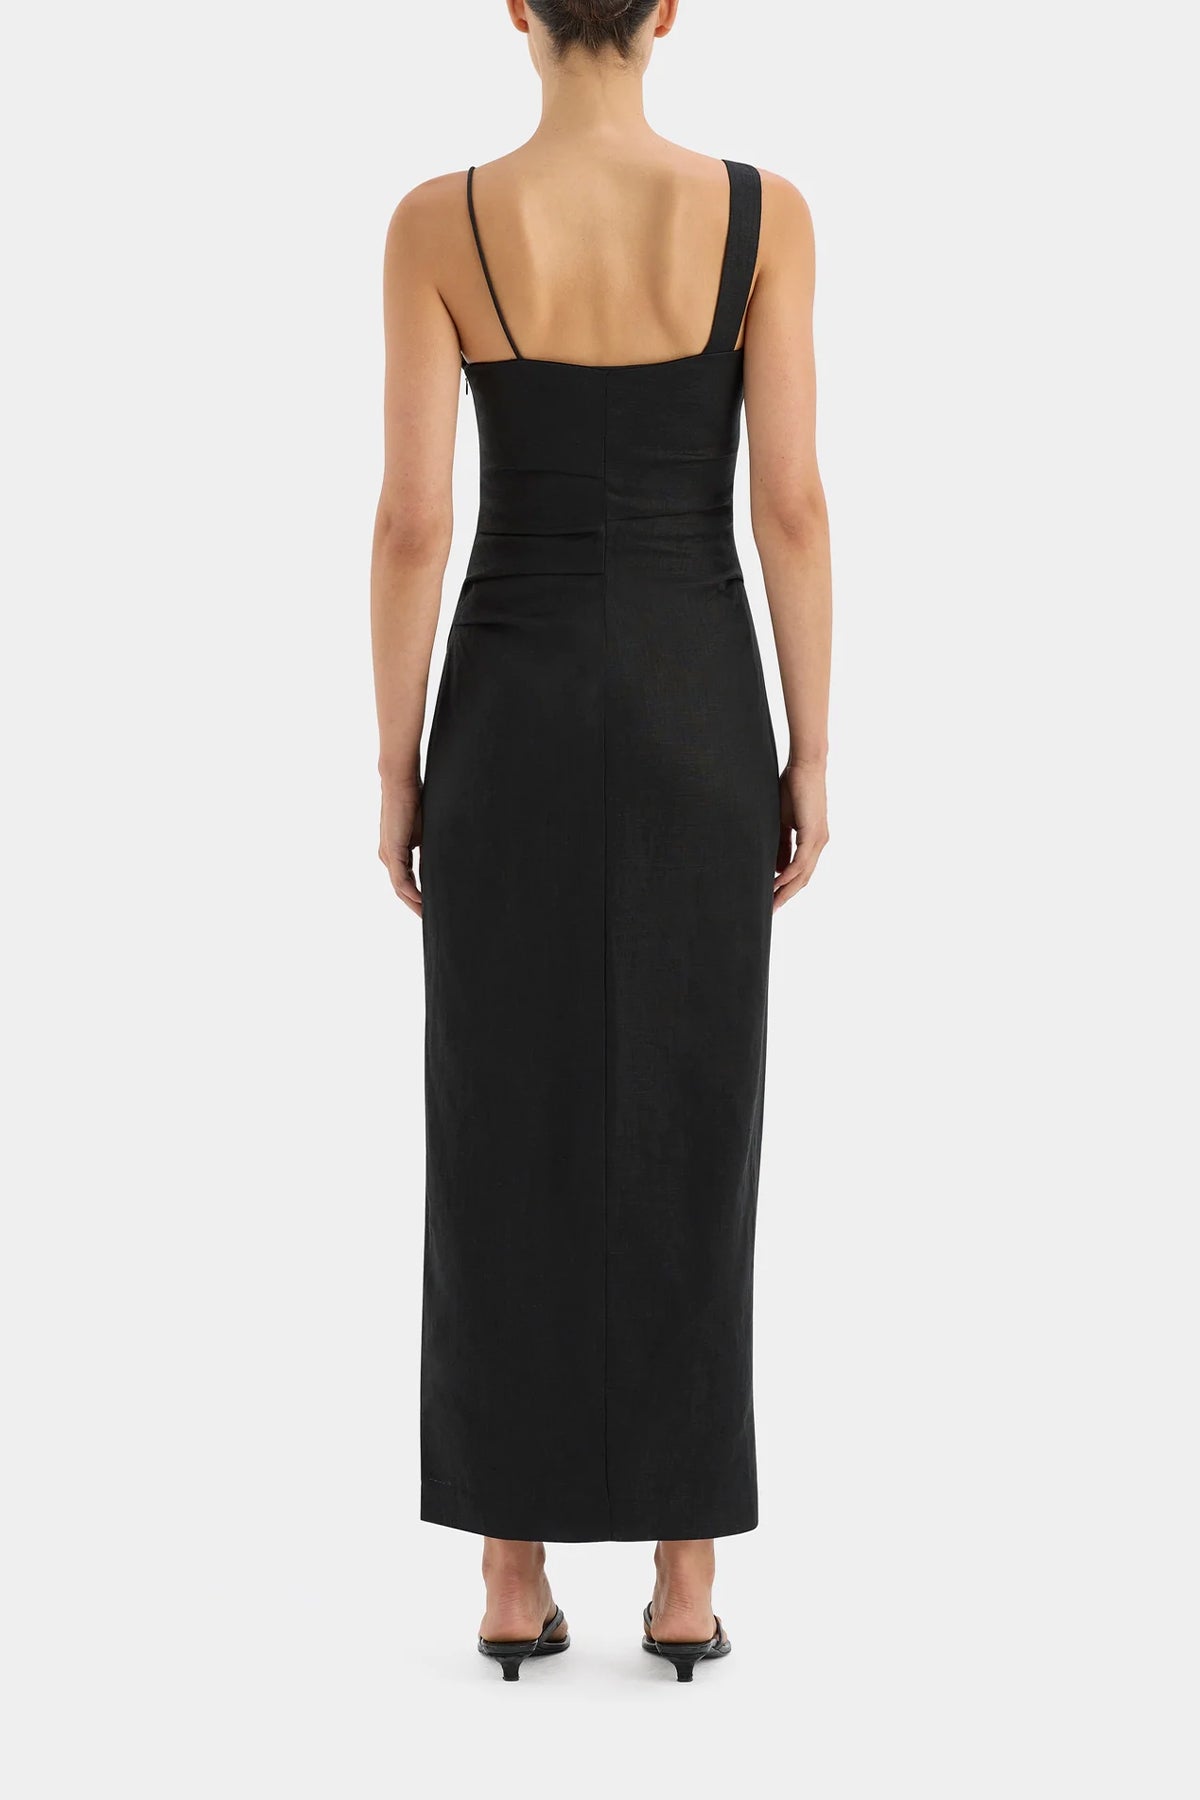 Antonia Beaded Midi Dress in Black - shop-olivia.com